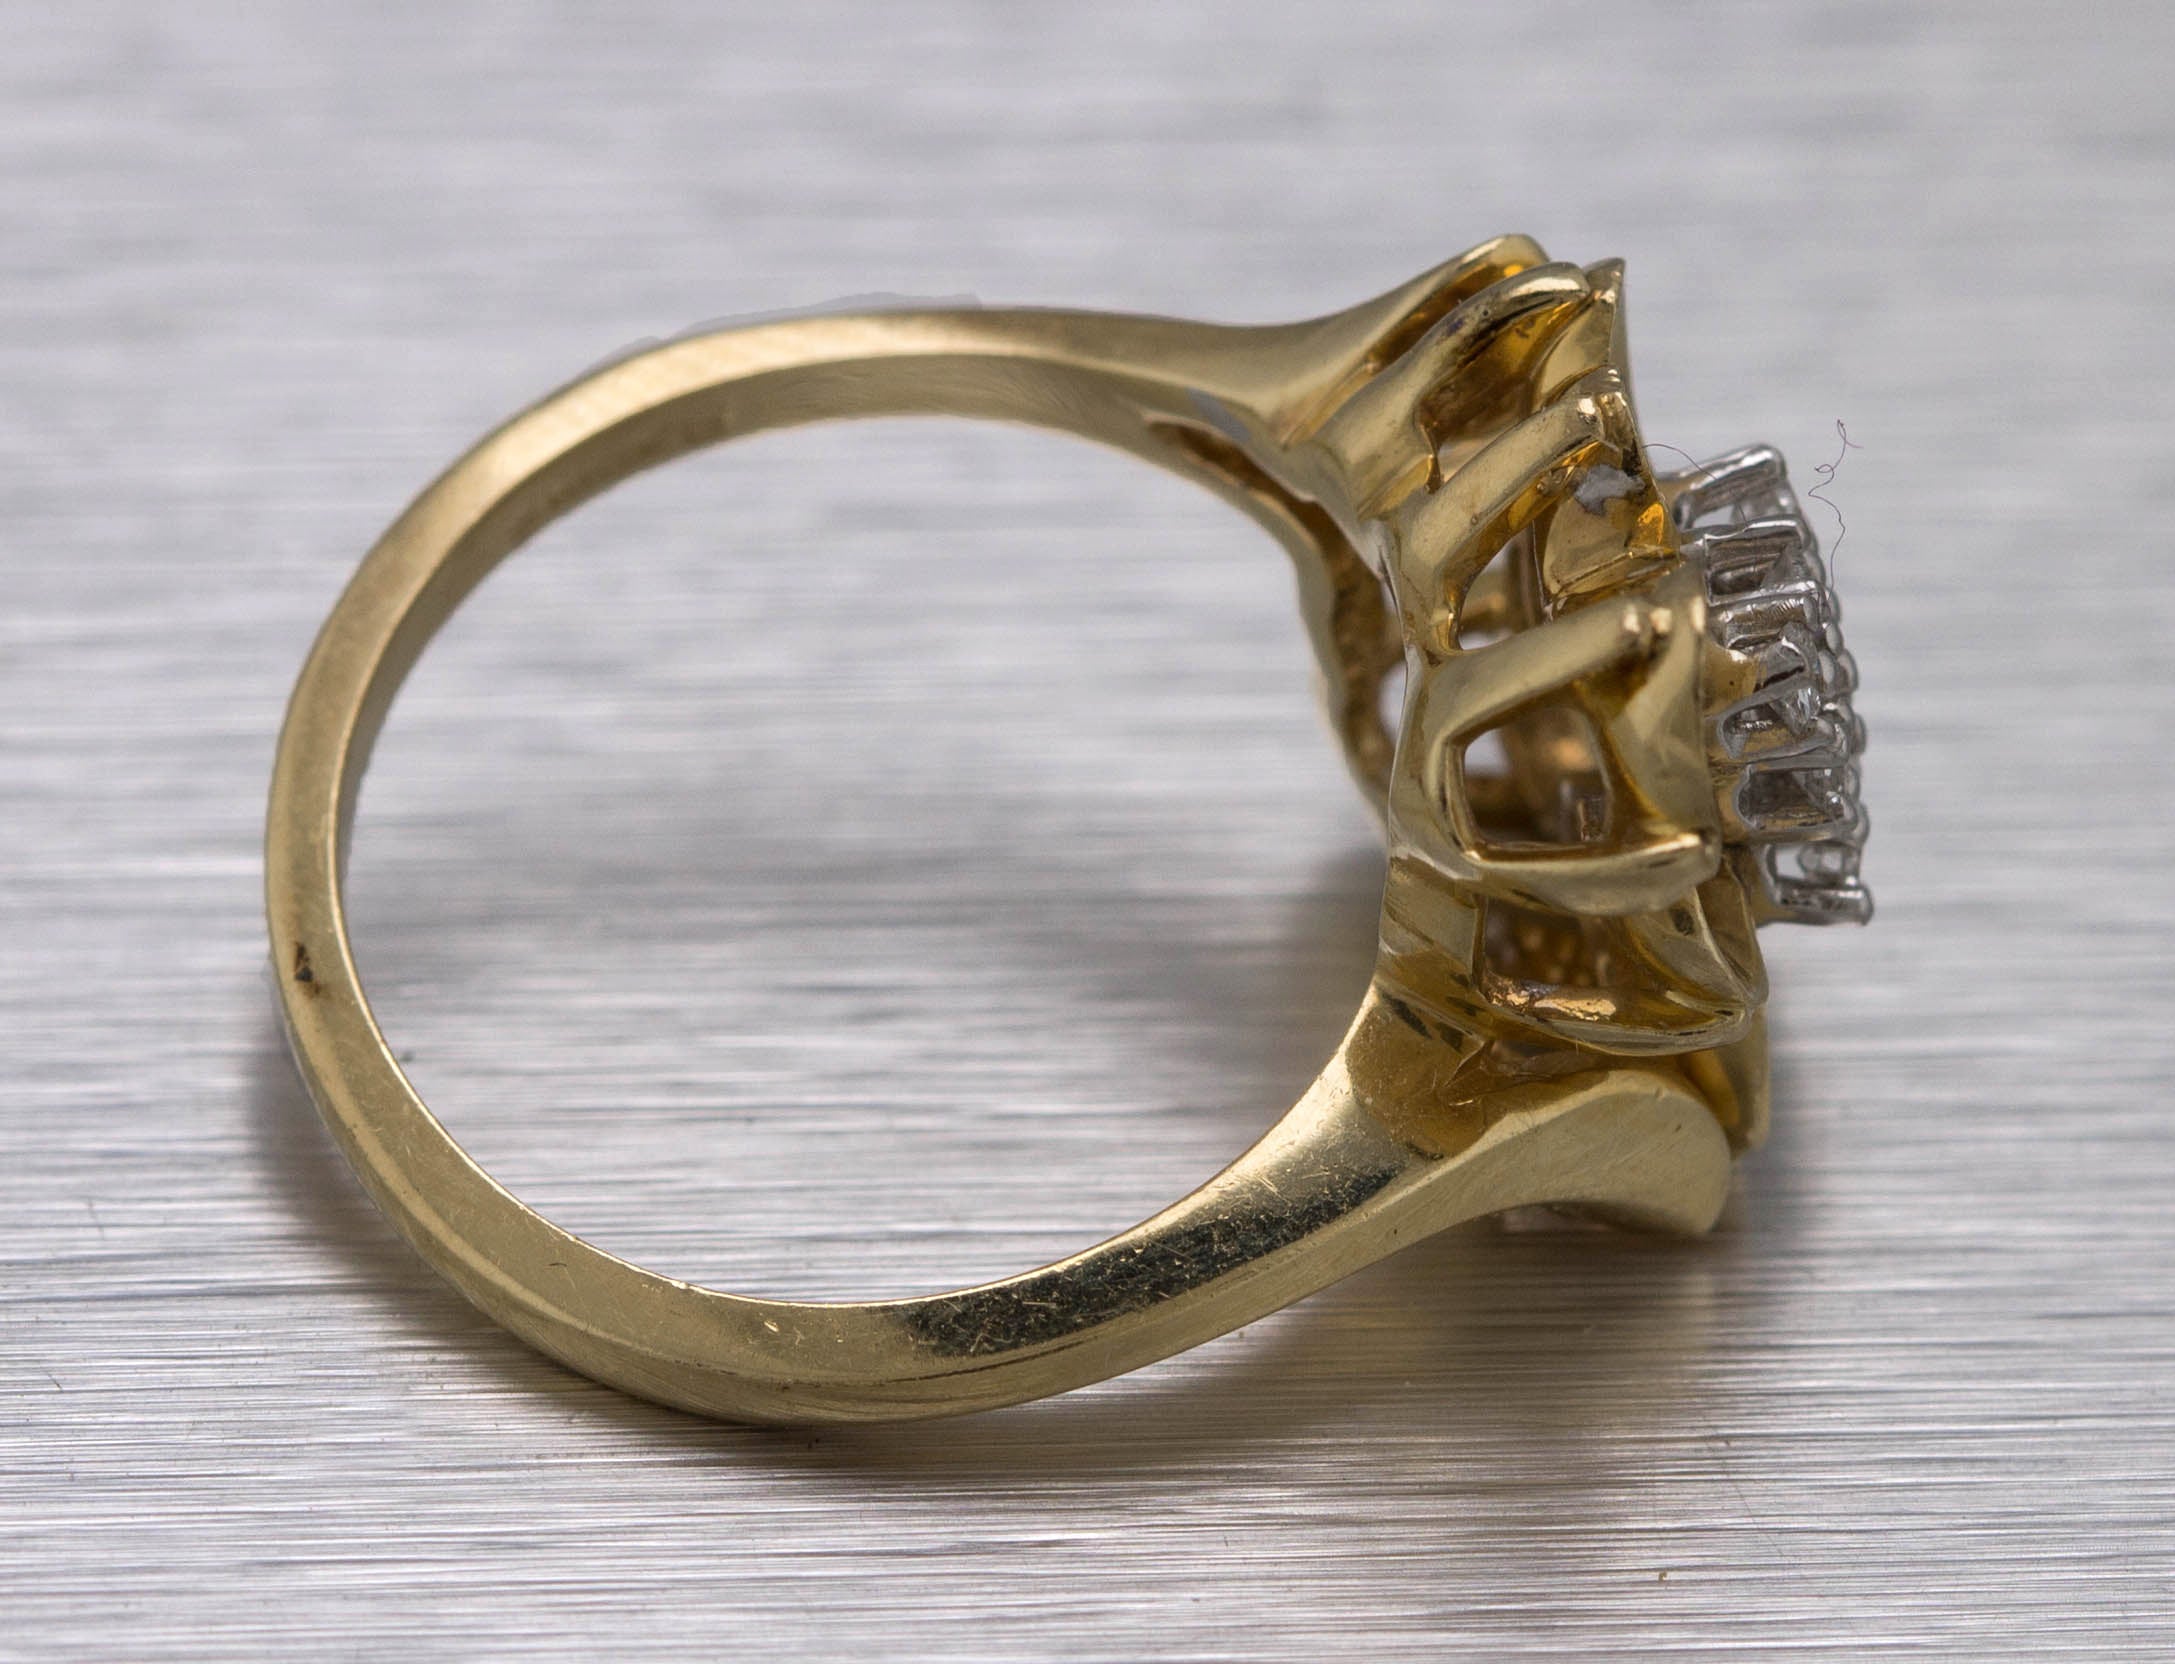 Ladies Antique Estate 14K Yellow Gold 0.18ctw Diamond Cluster Cocktail Ring